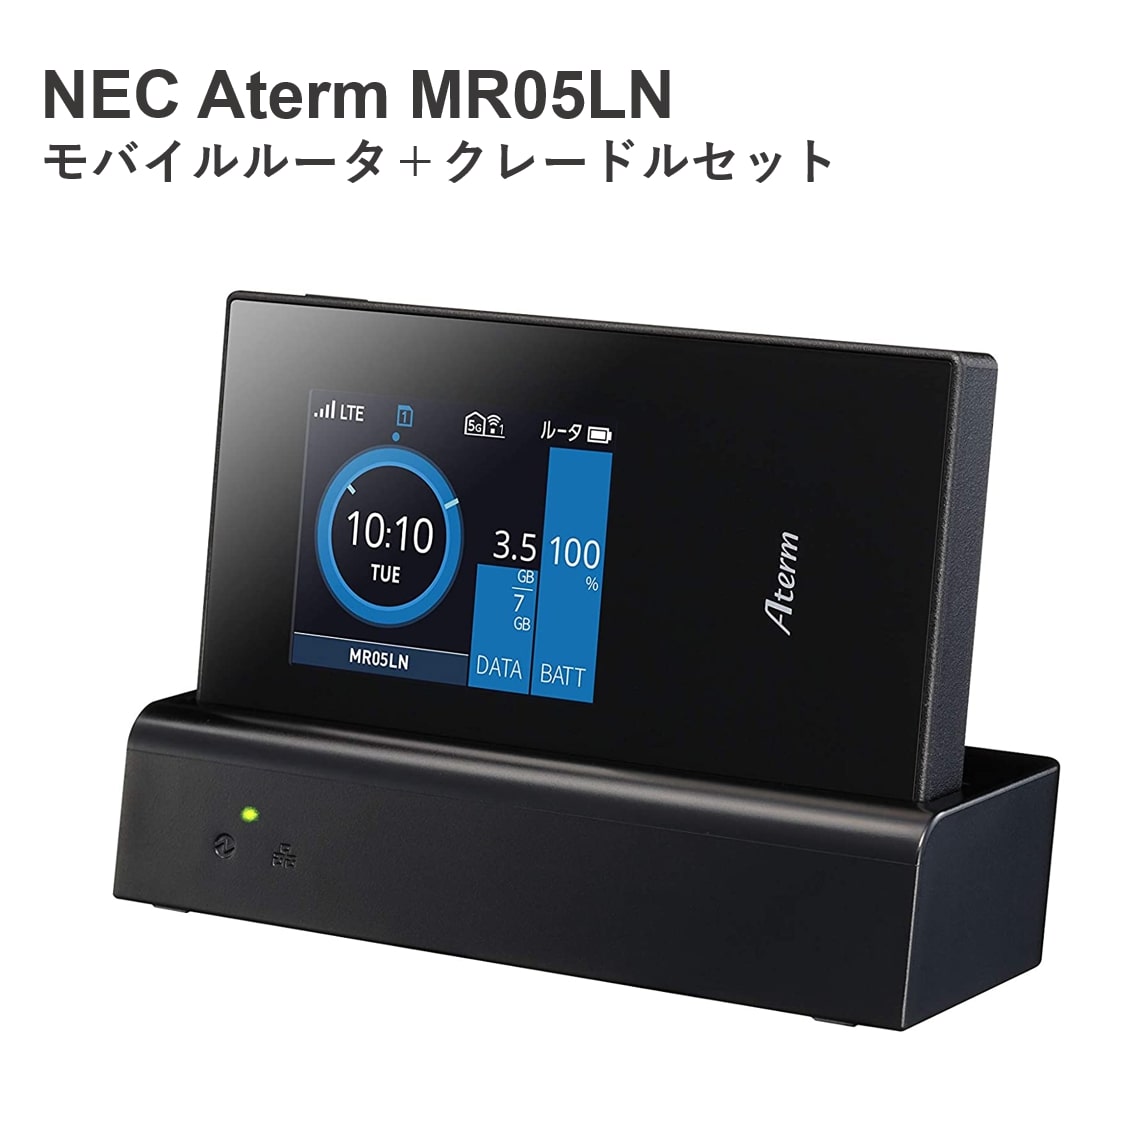 NEC Aterm MR05LN Black